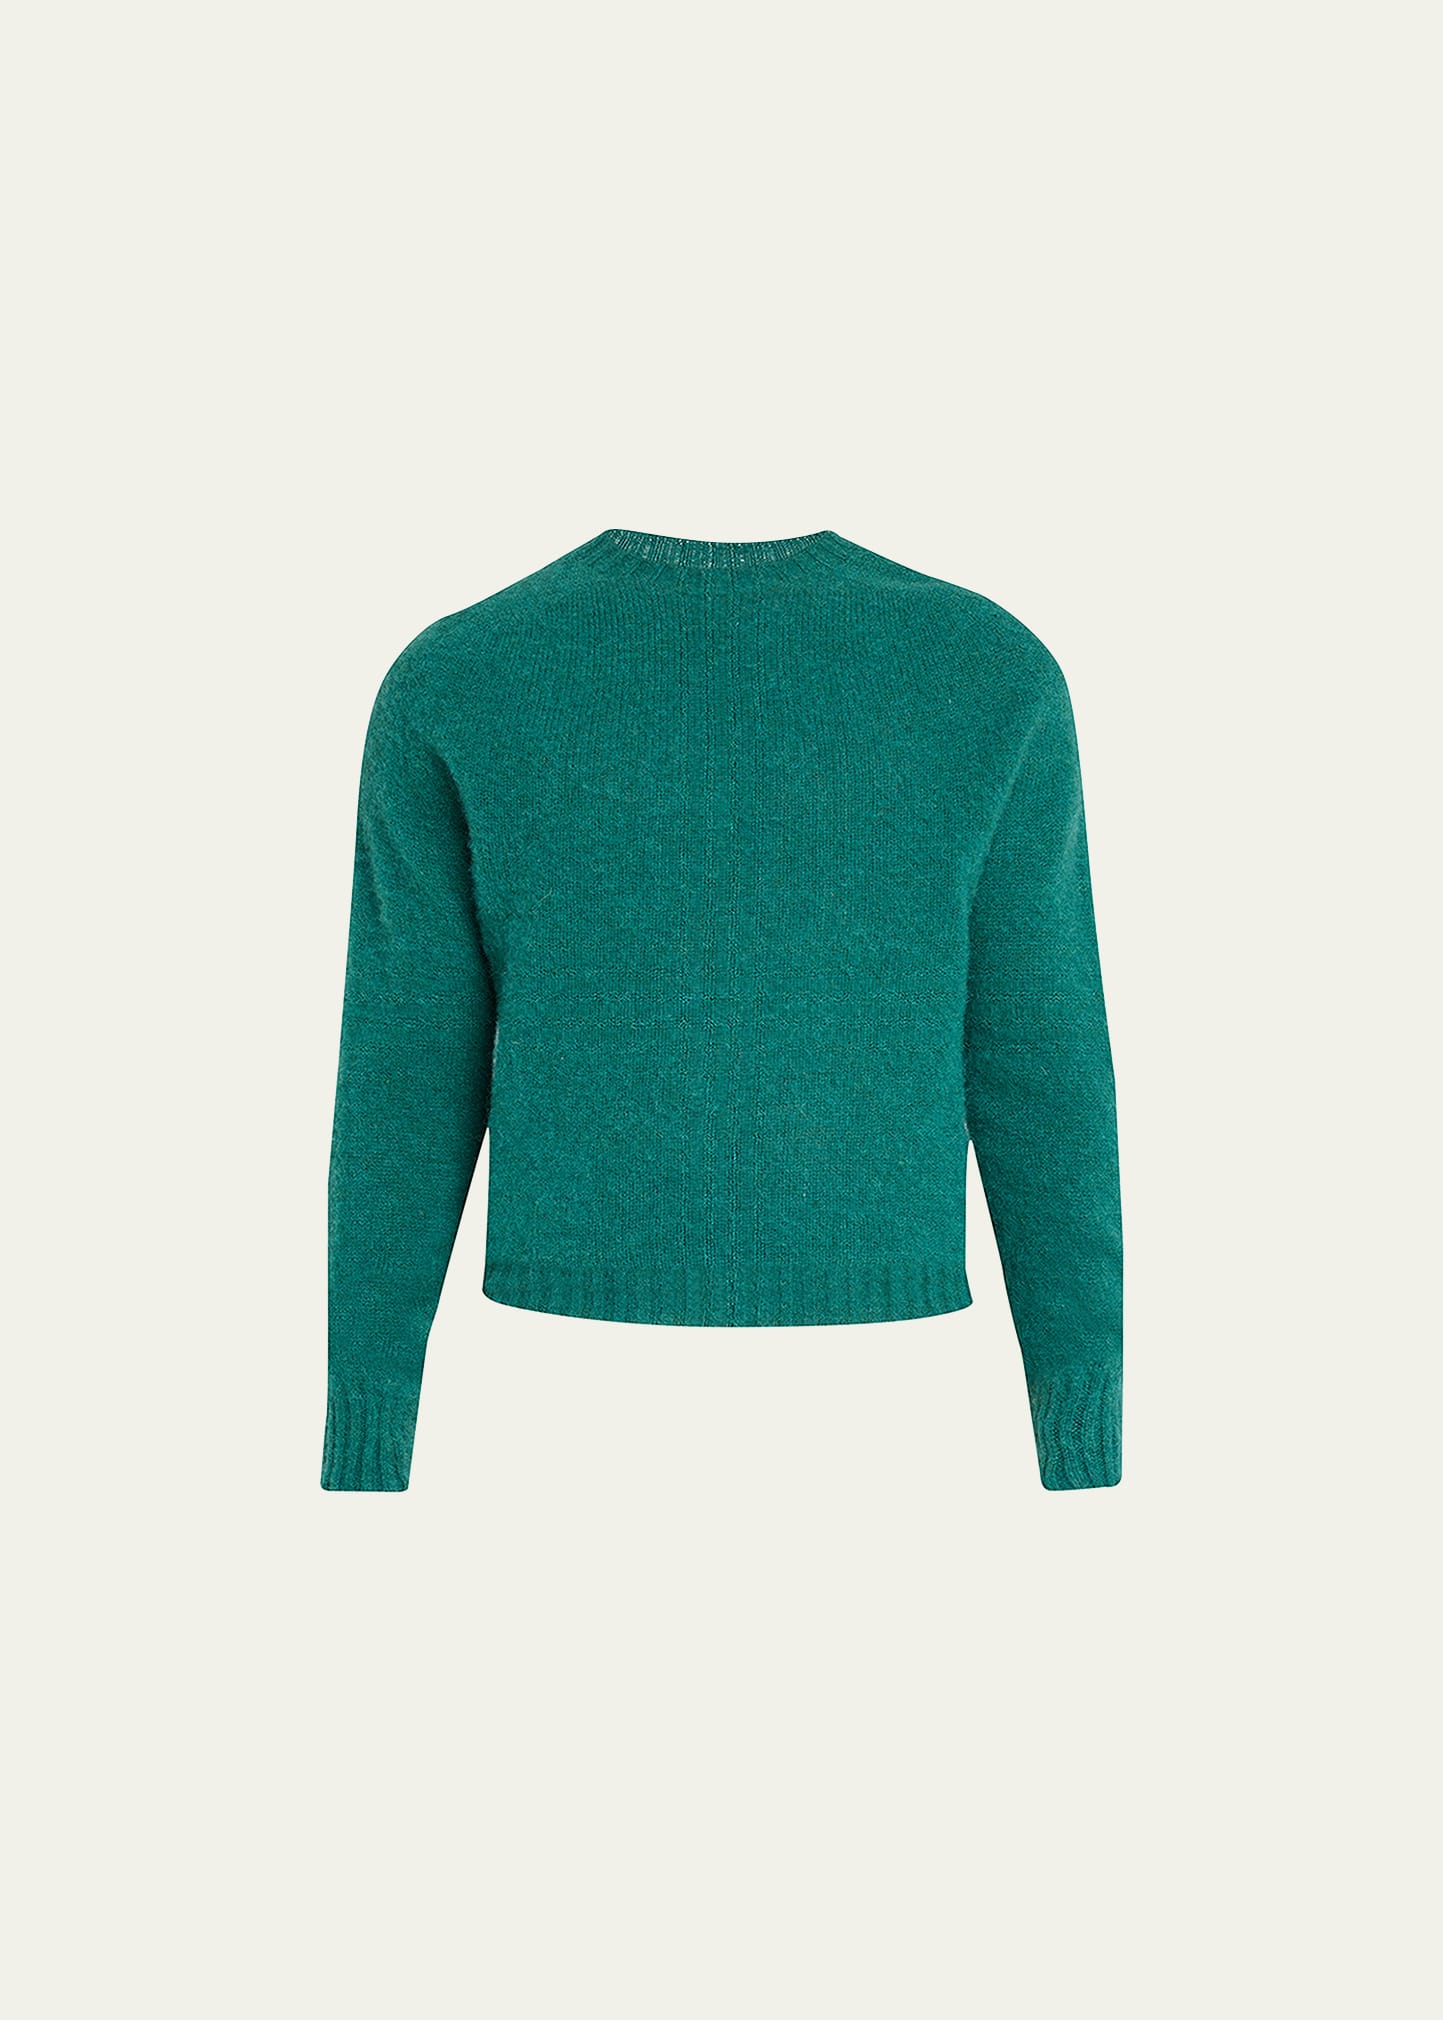 HOWLIN' Men's Shetland Wool Crewneck Sweater